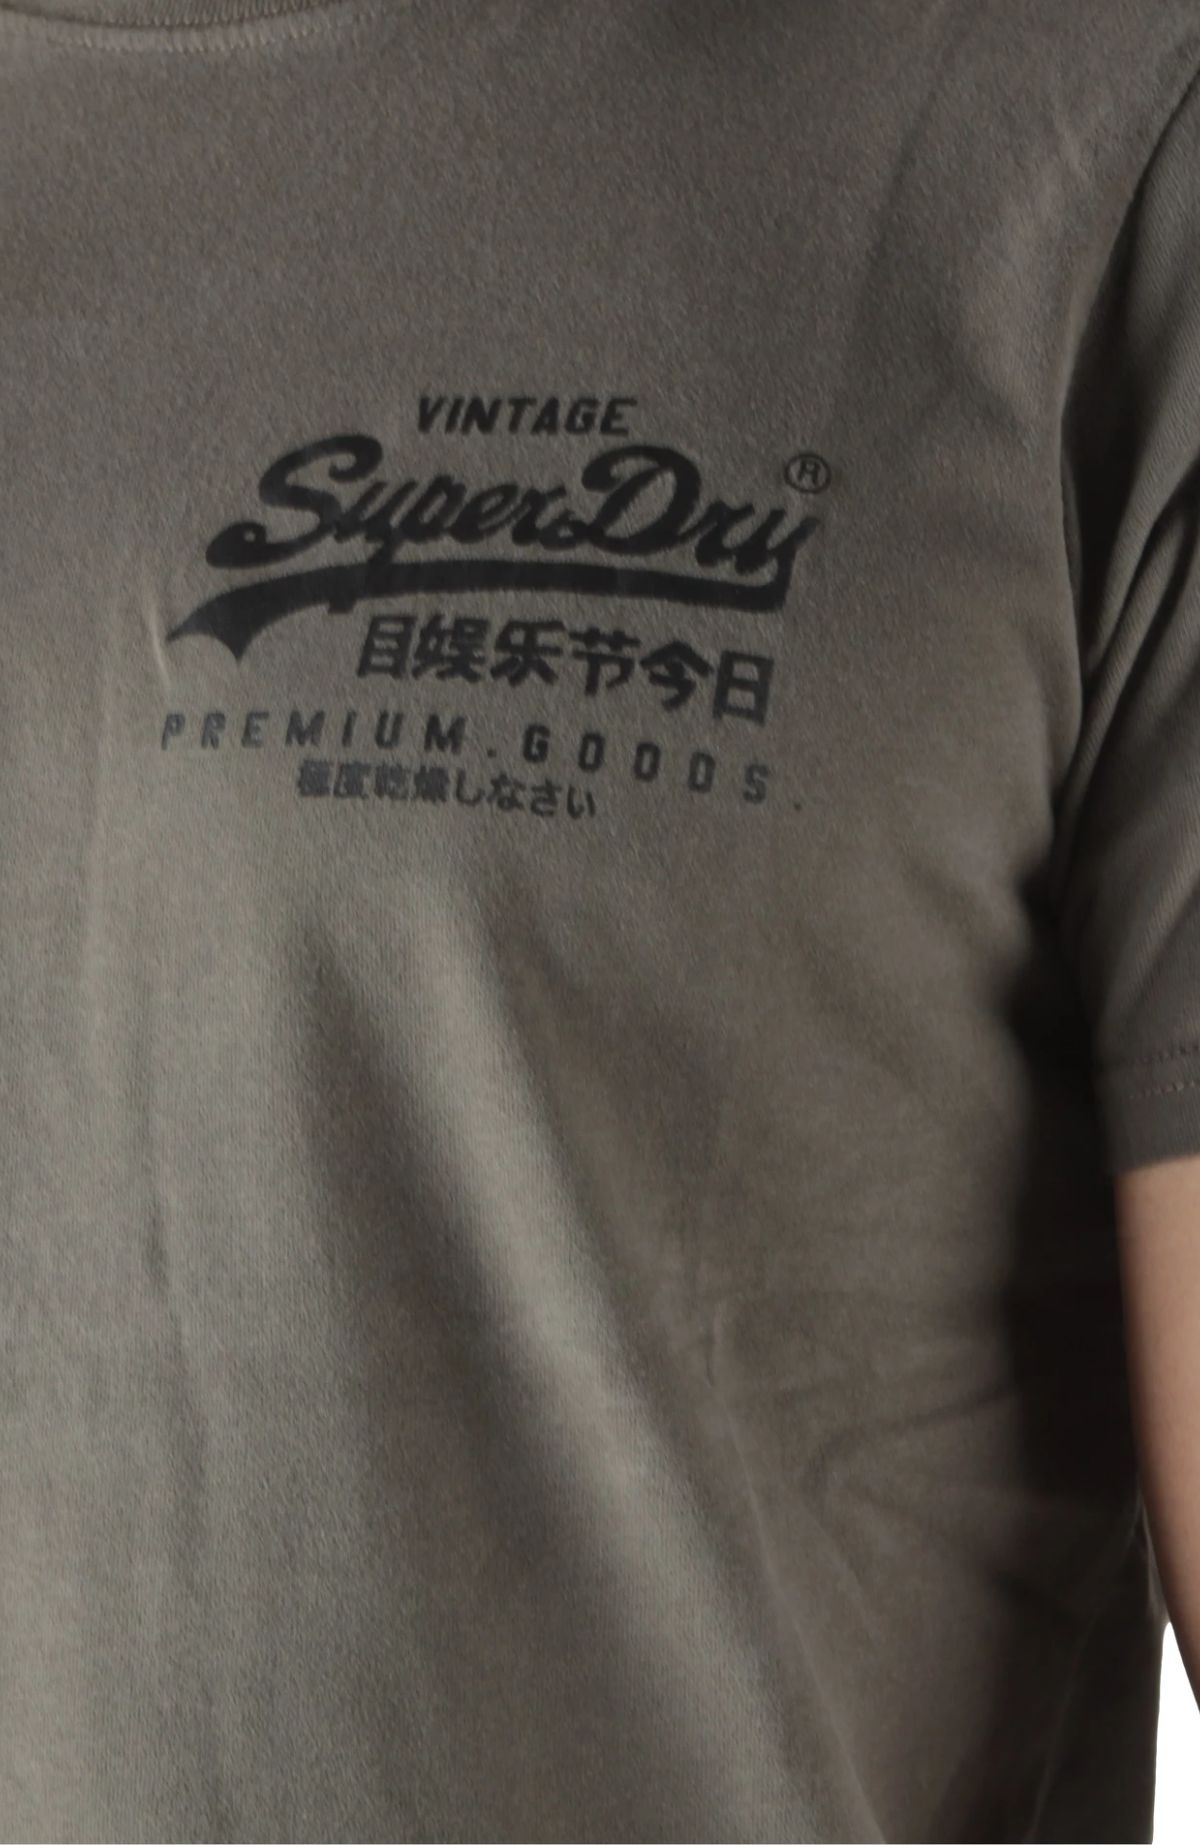 Tokyo Vl Graphic T Shirt